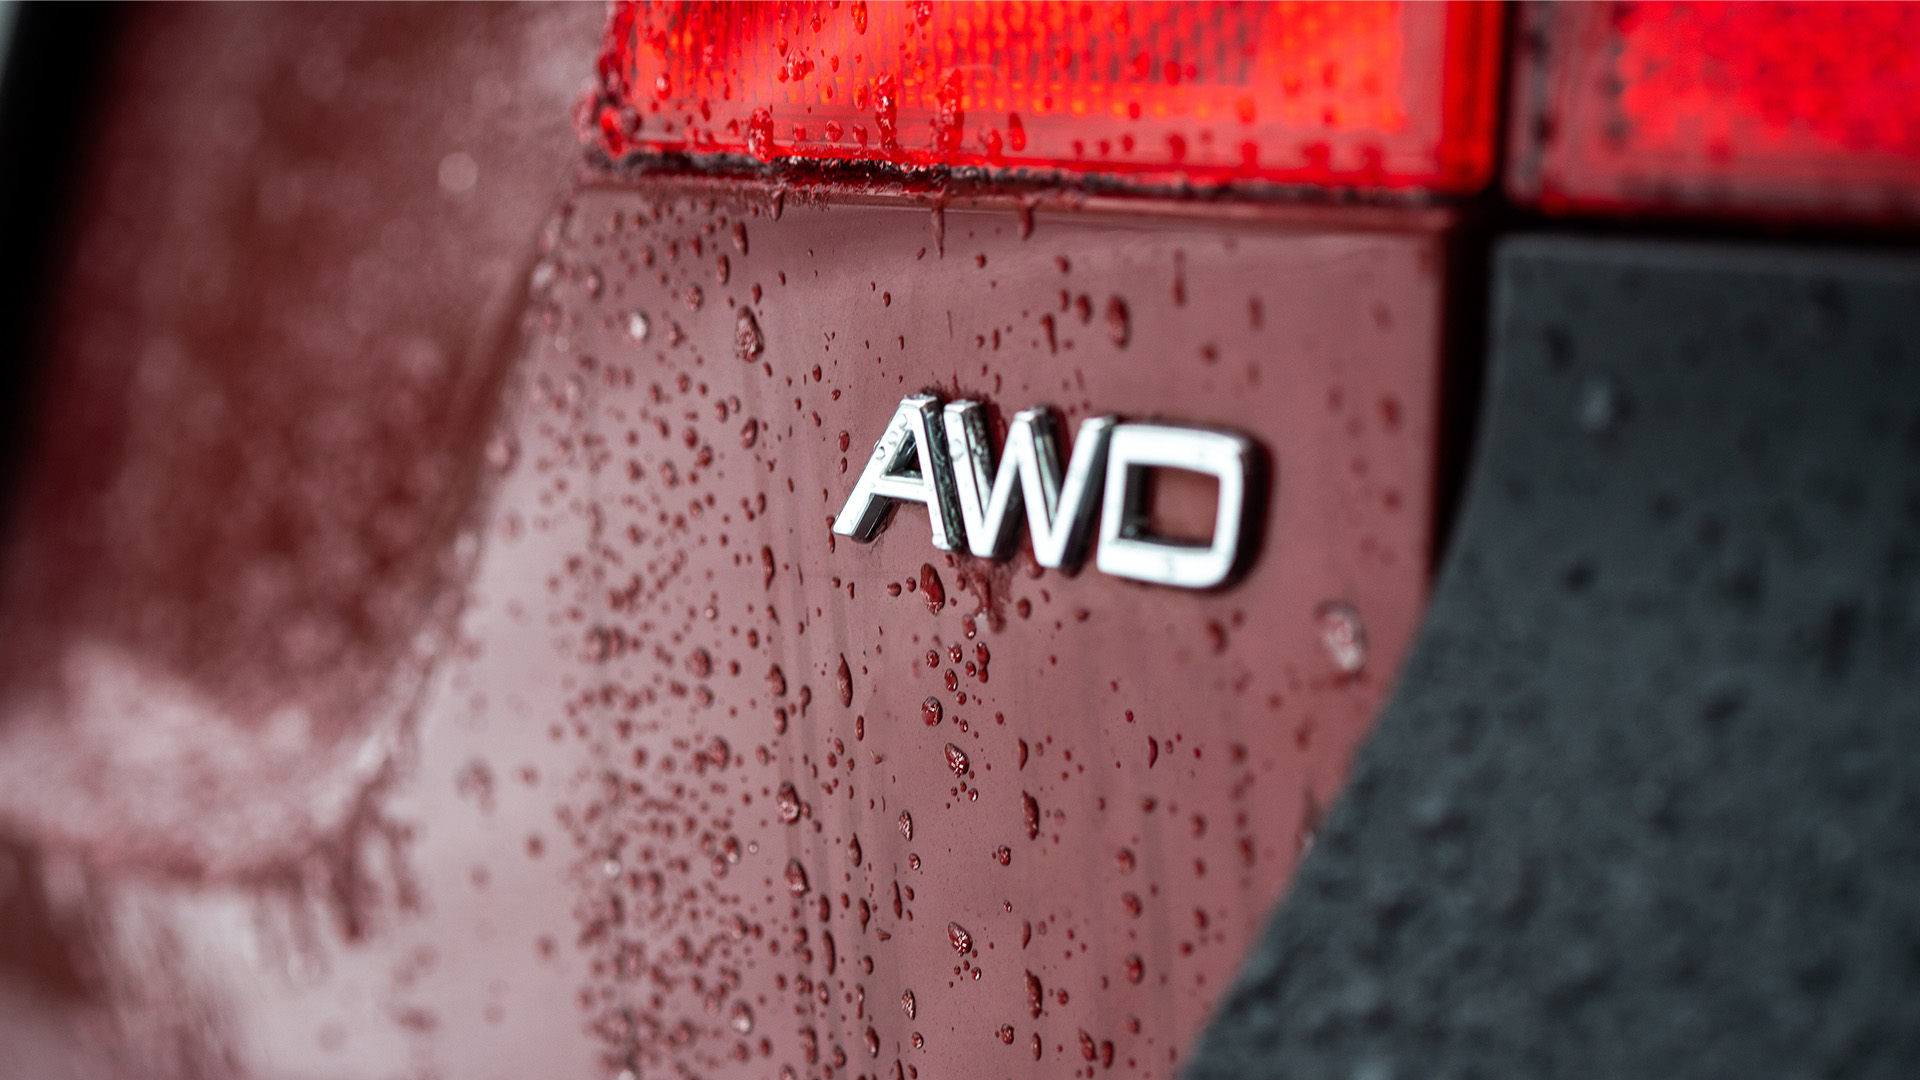 badge on car spelling AWD